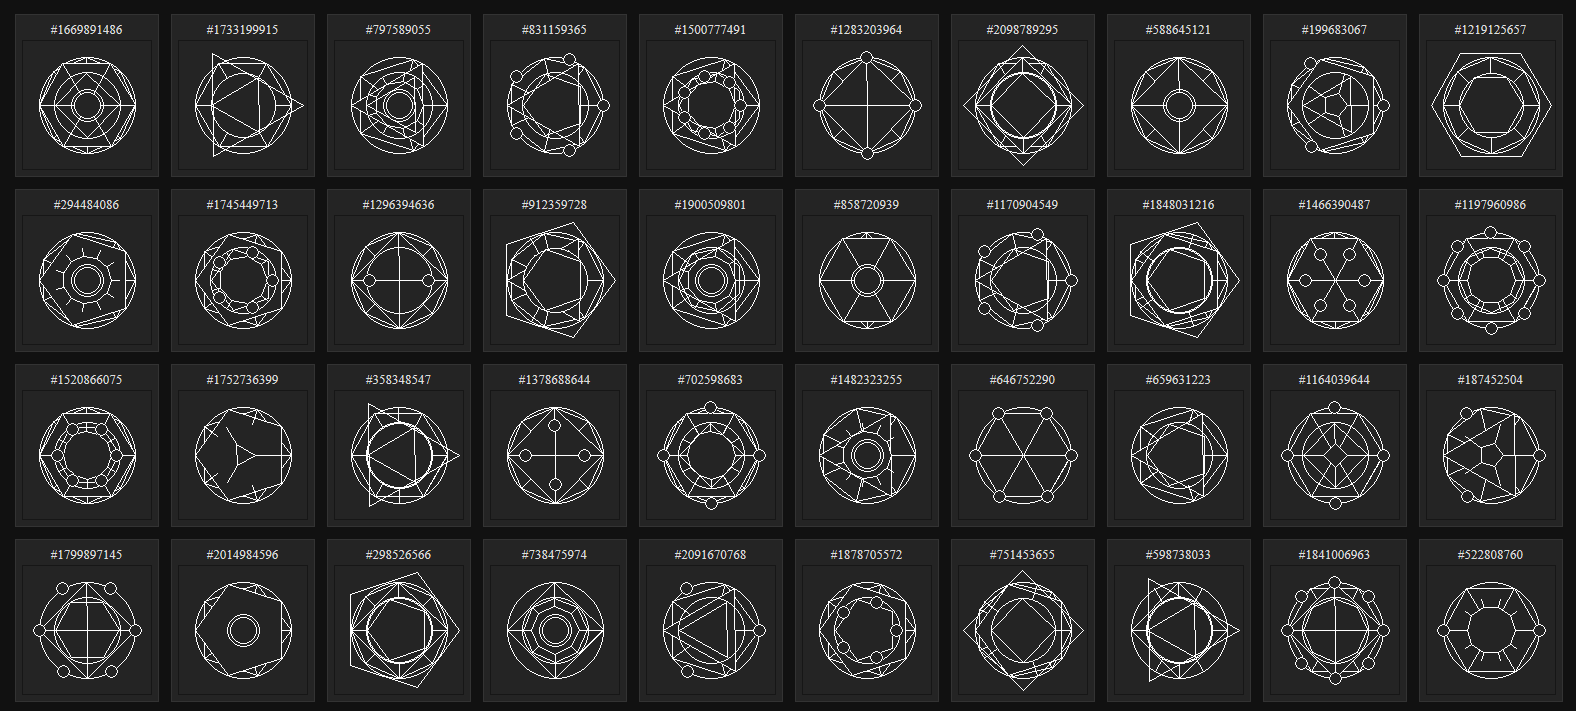 simple alchemy circle